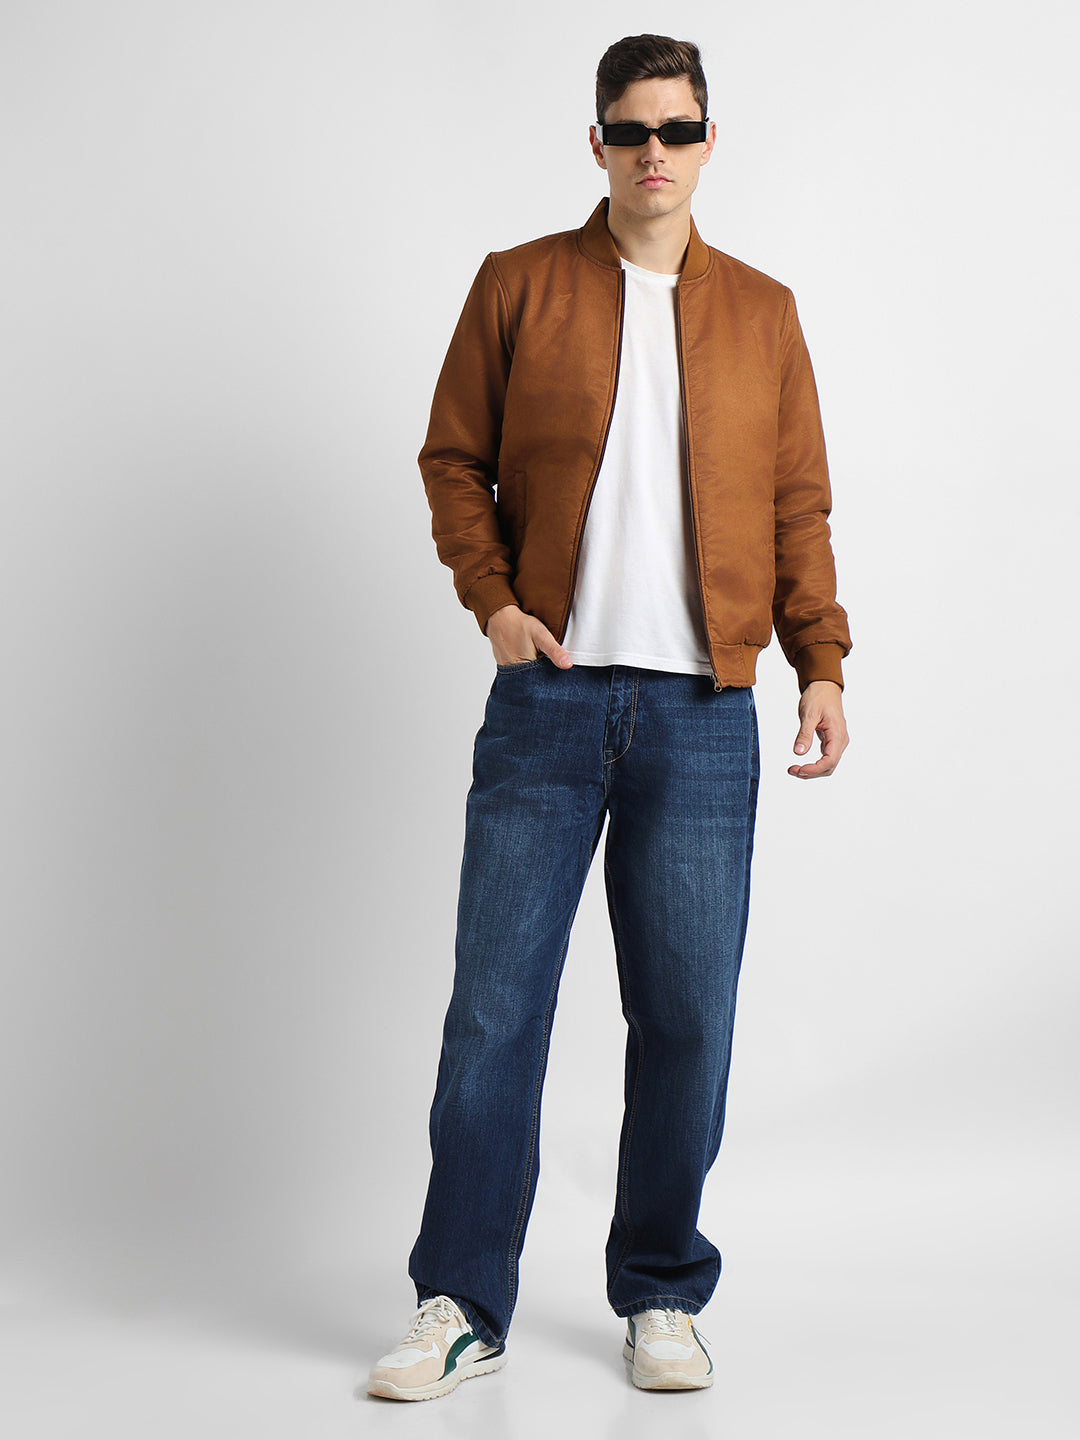 Dennis Lingo Men's Tan Solid Rib Collar Full Sleeve Light weight jacket Jackets